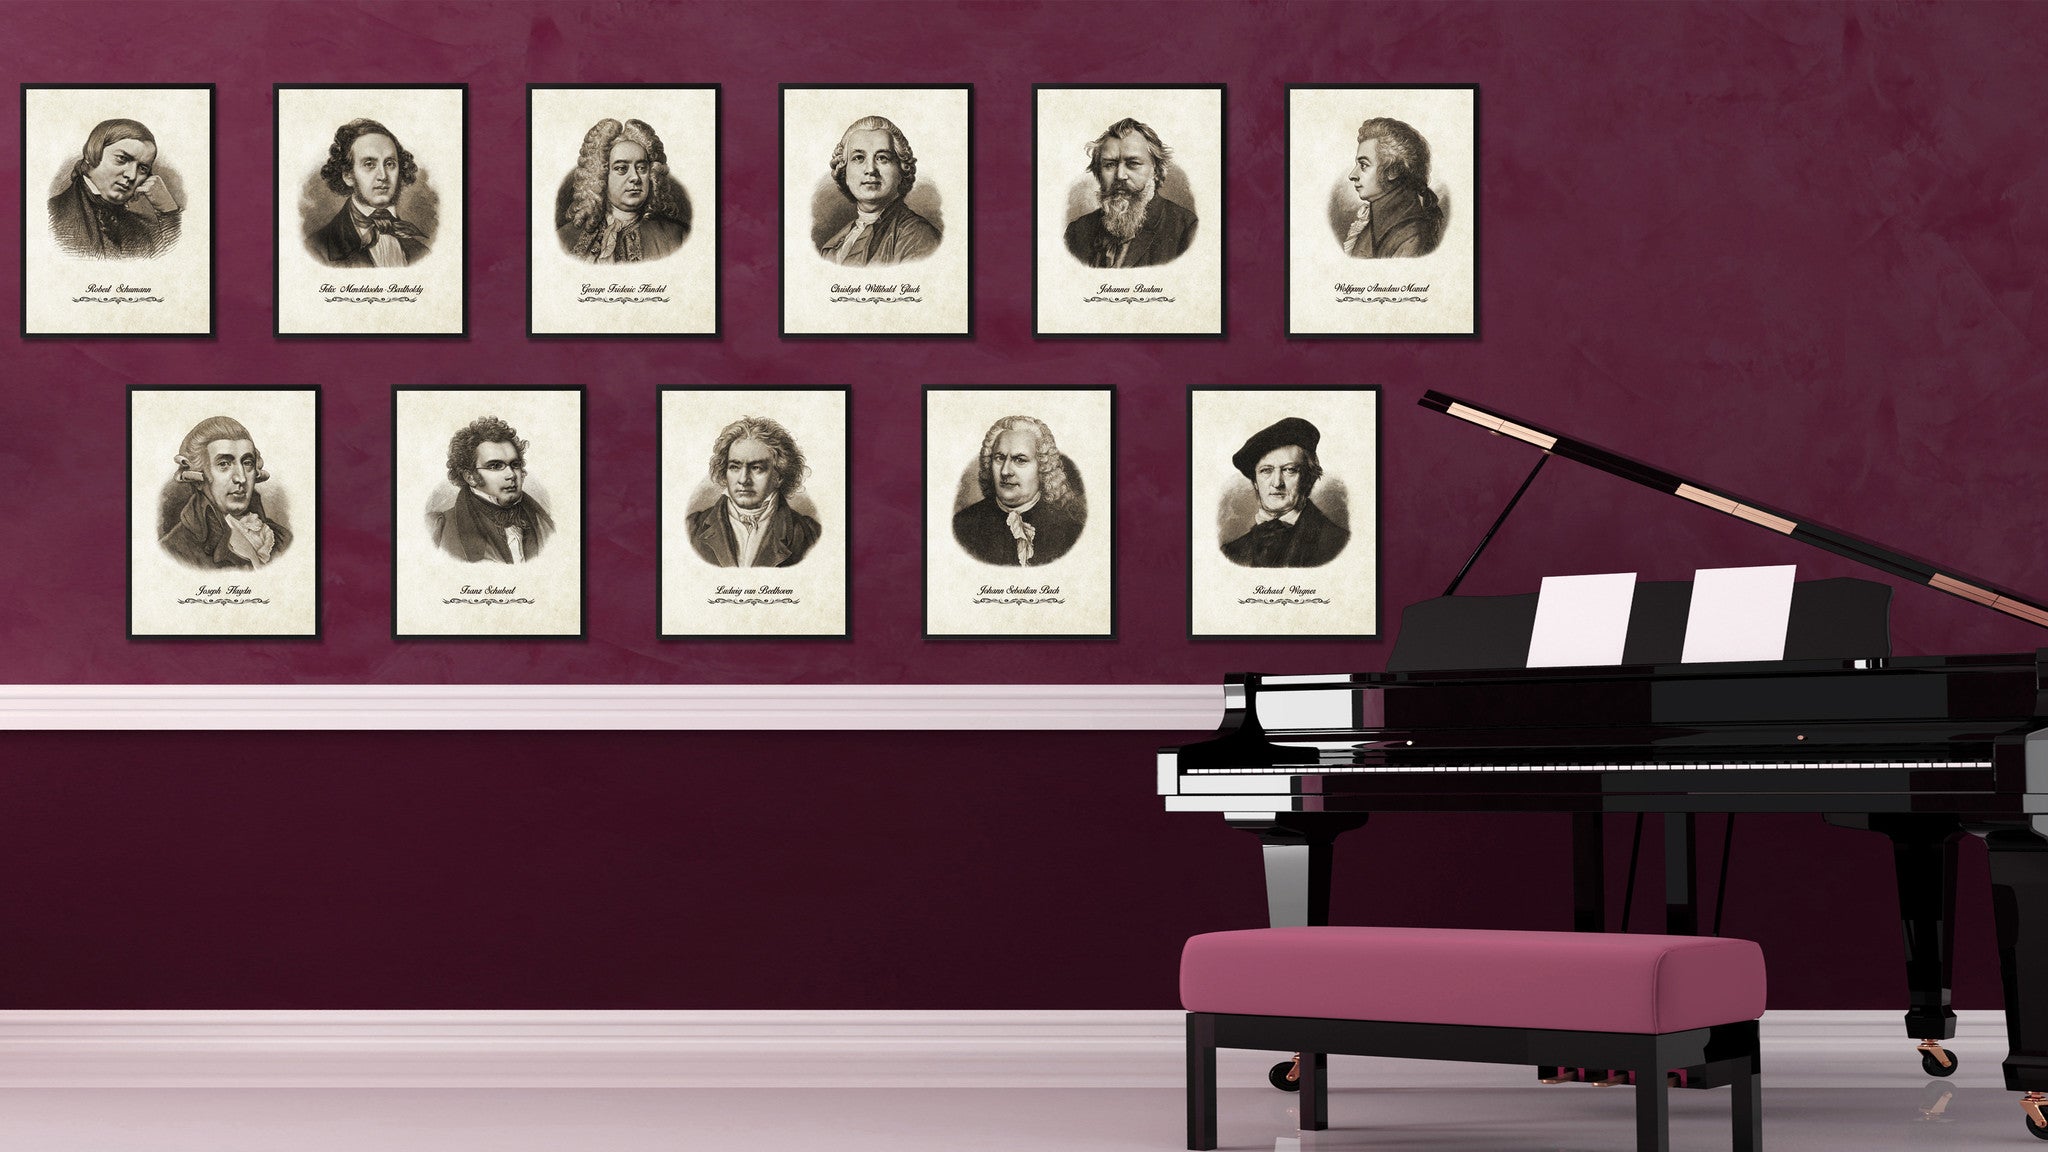 Schumann Musician Canvas Print Pictures Frames Music Home Décor Wall Art Gifts